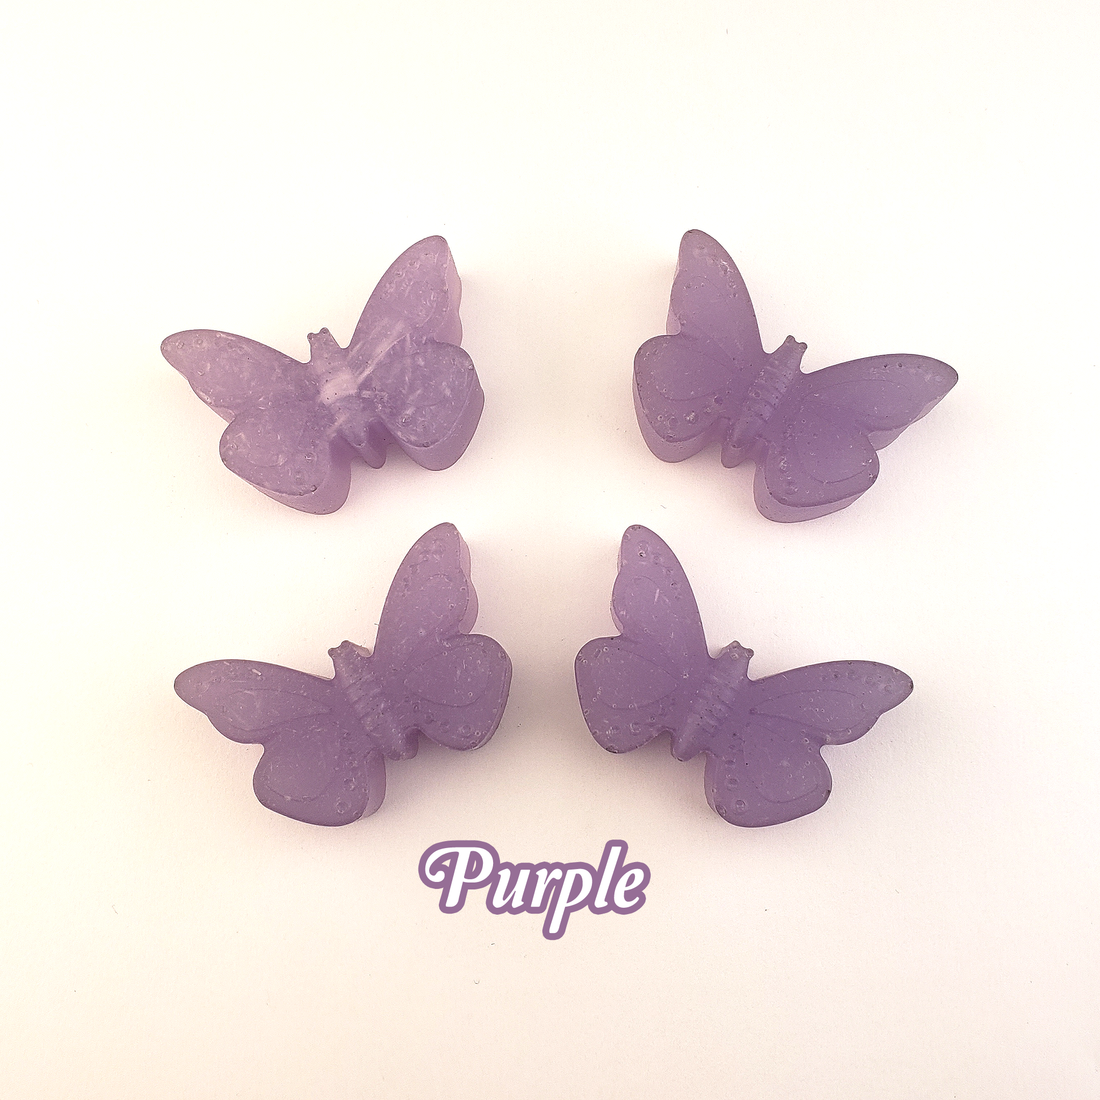  Rainbow Resin Butterfly Totem Figurine - Handmade Valentine's Day Gift - Purple